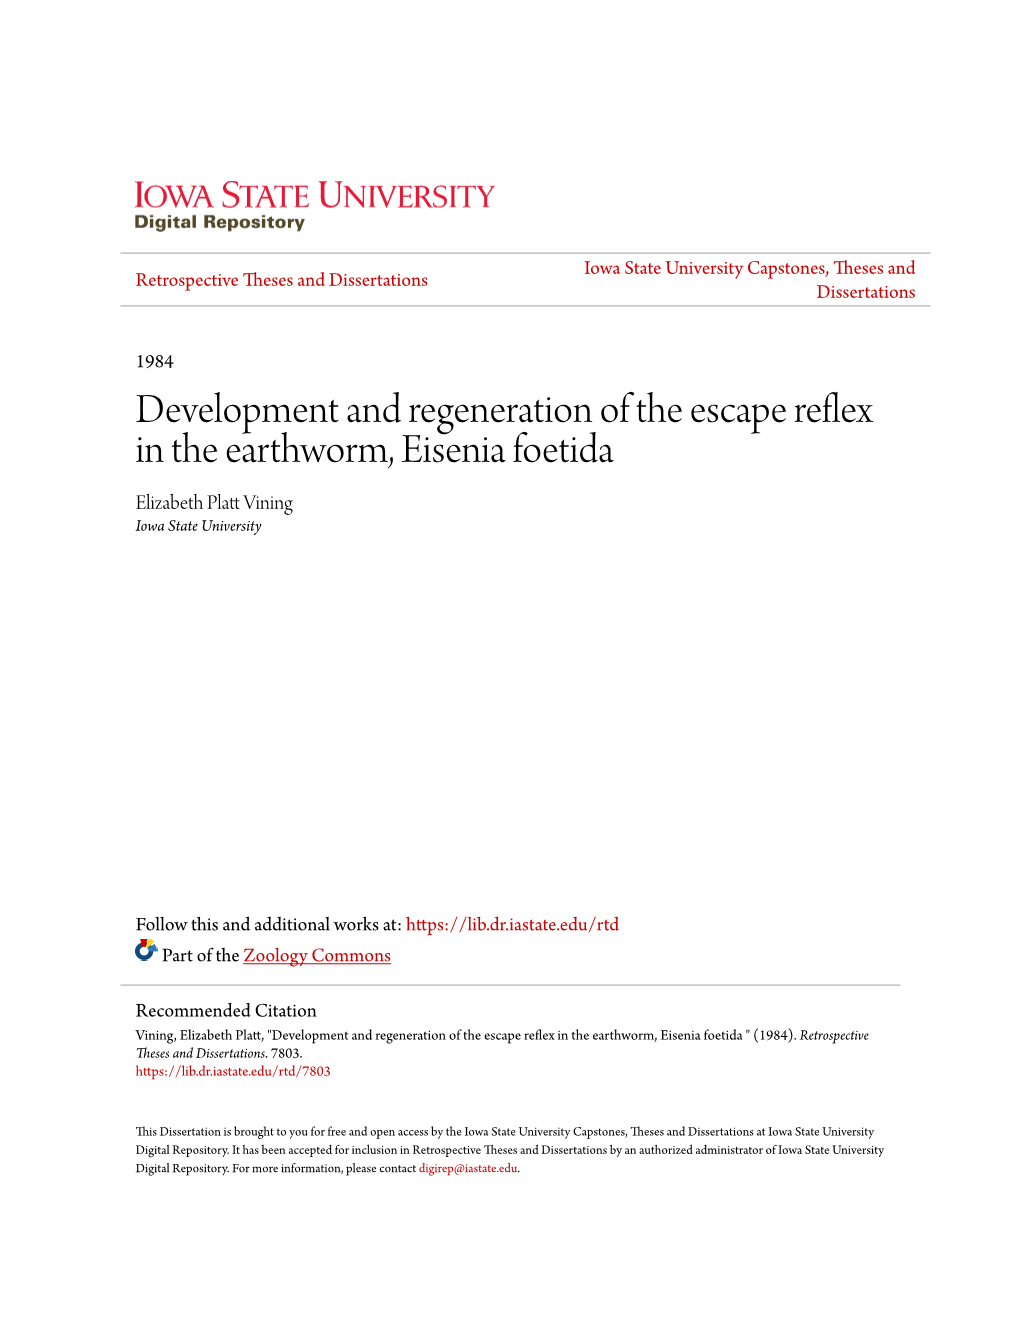 Development and Regeneration of the Escape Reflex in the Earthworm, Eisenia Foetida Elizabeth Platt Ininv G Iowa State University